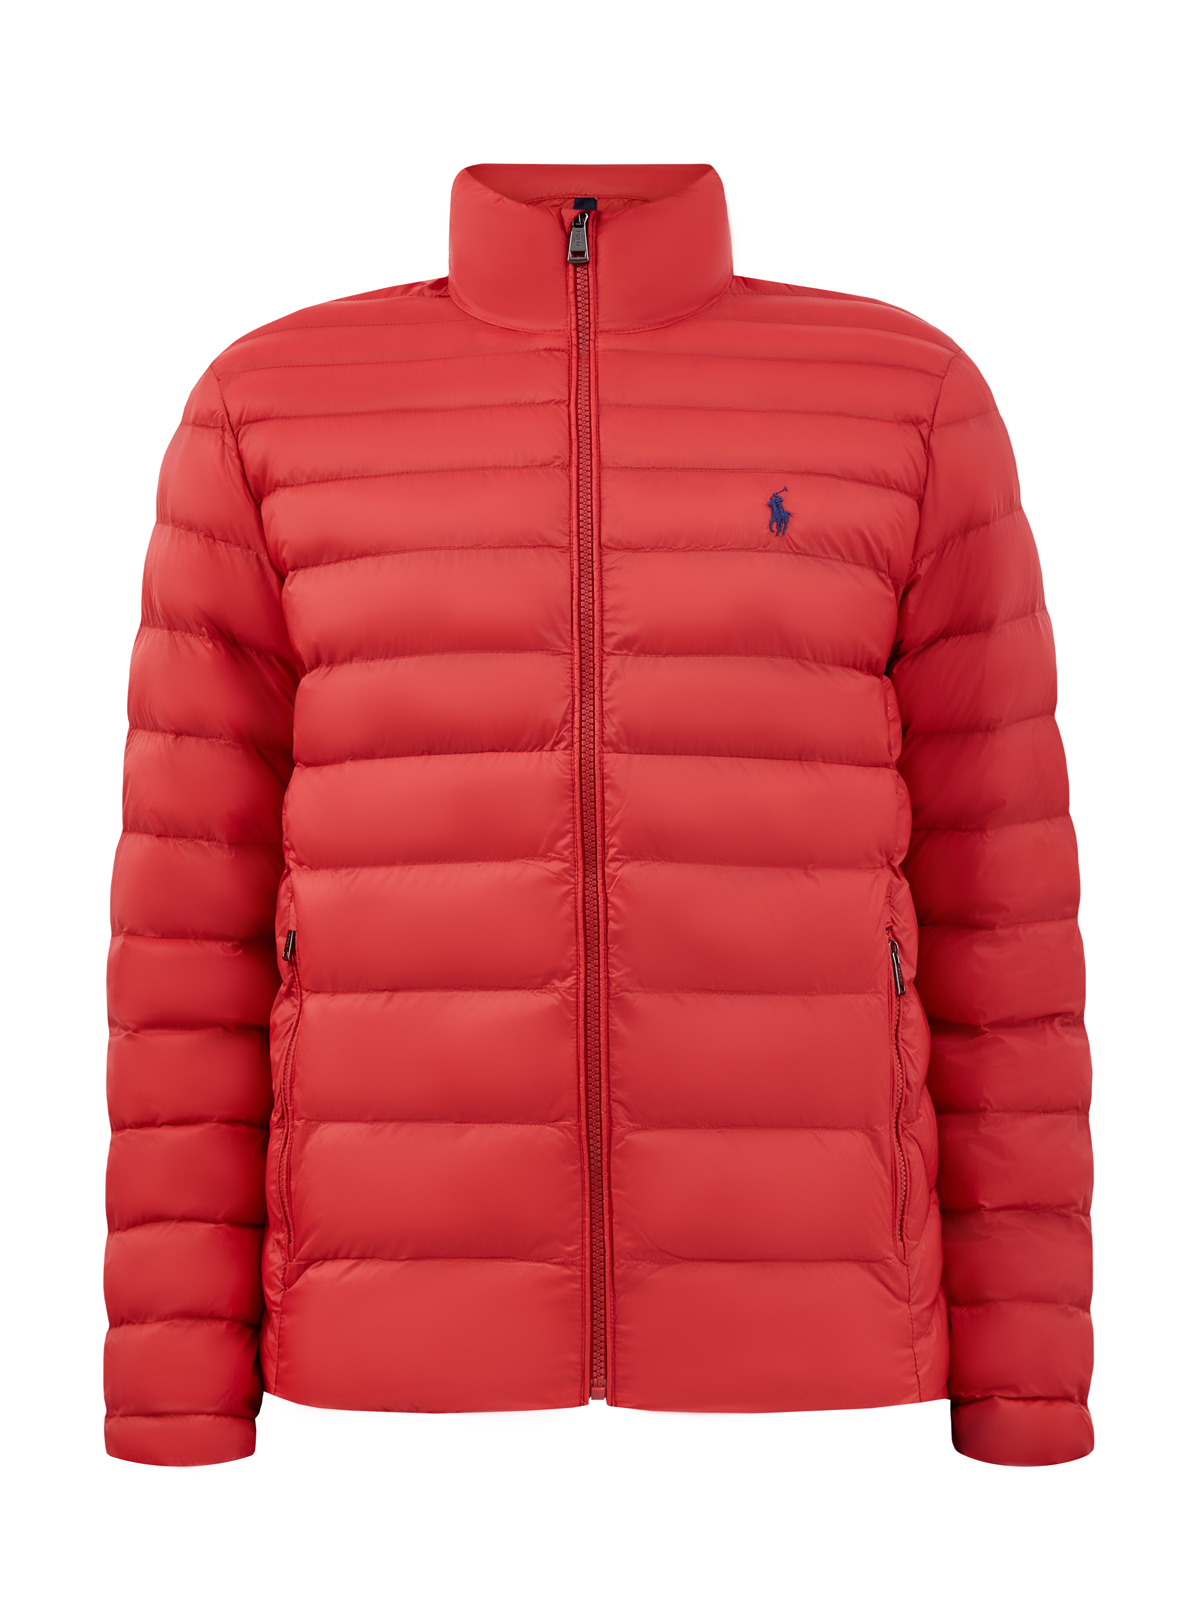 Компактная куртка из нейлона PrimaLoft® ThermoPlume™ POLO RALPH LAUREN, цвет красный, размер L;M;S - фото 1